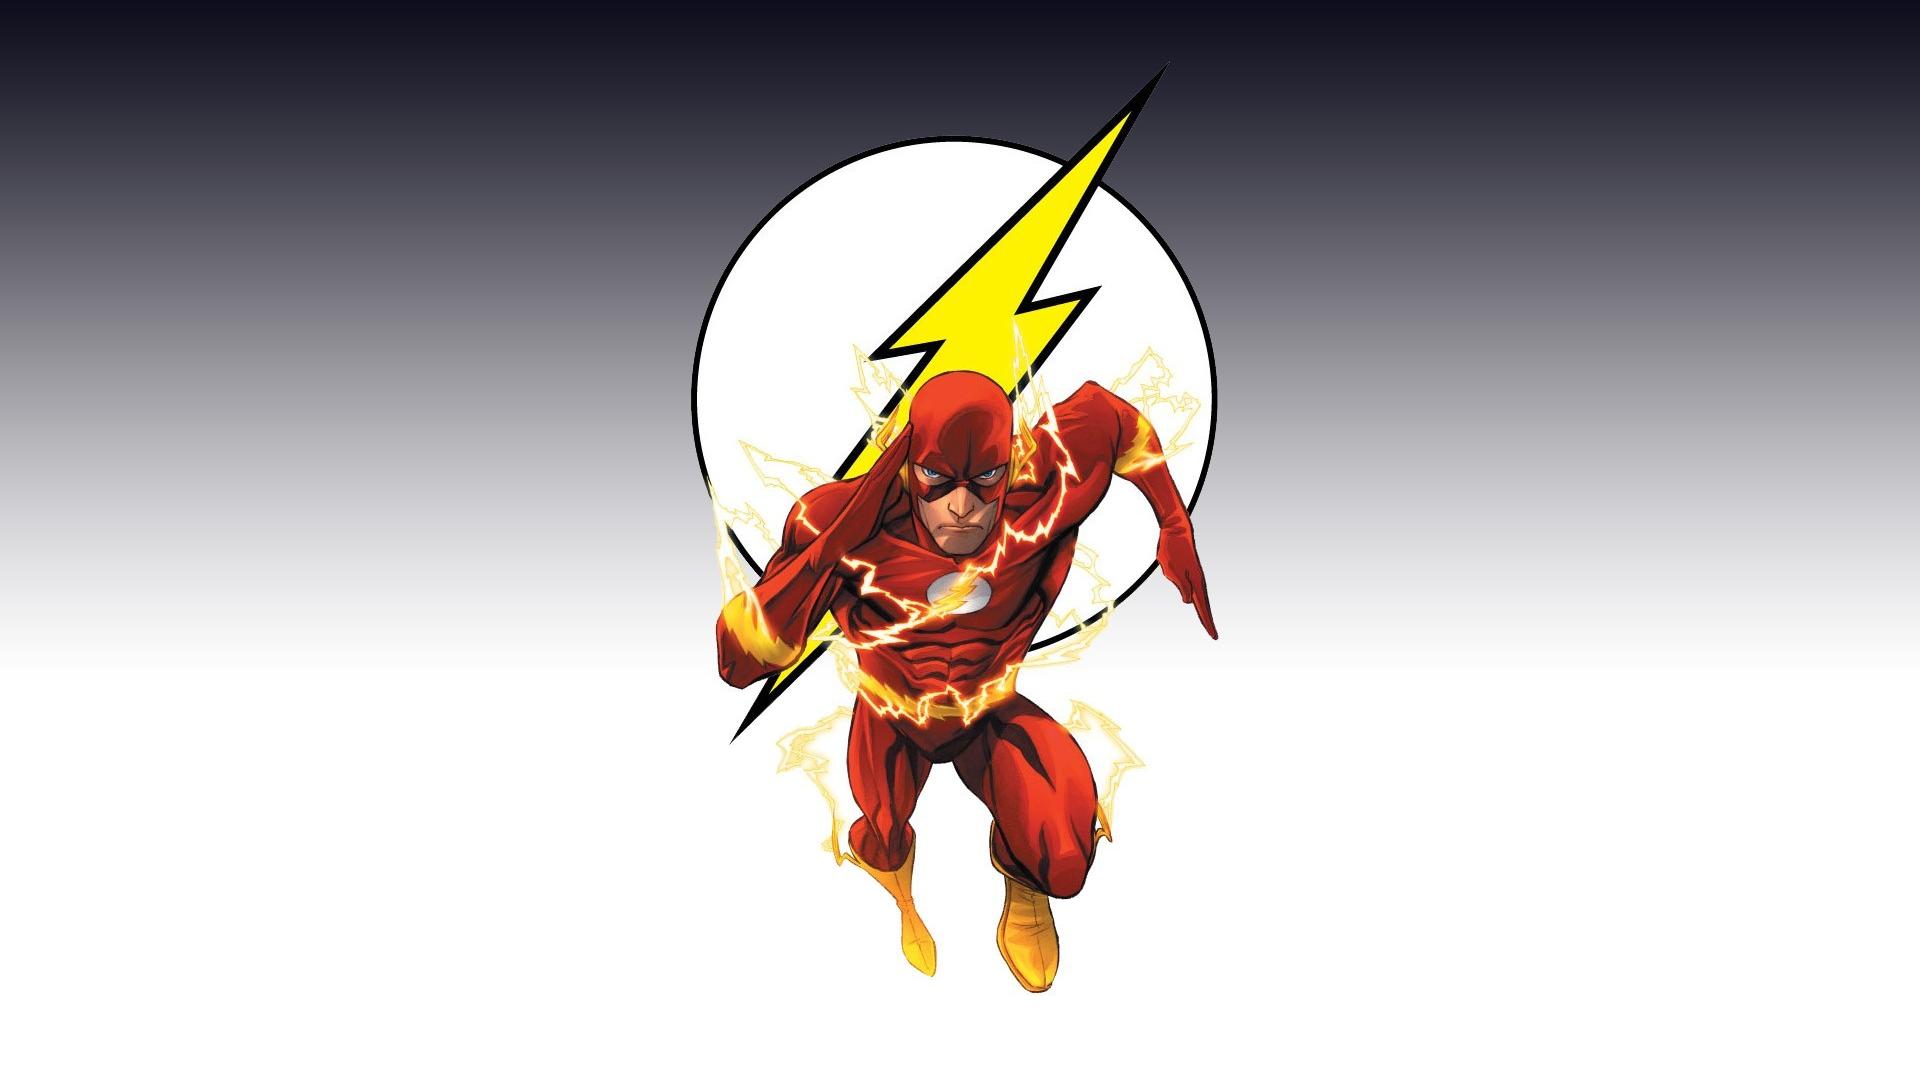 Dc comics superheroes flash comic hero wallpaper 17162